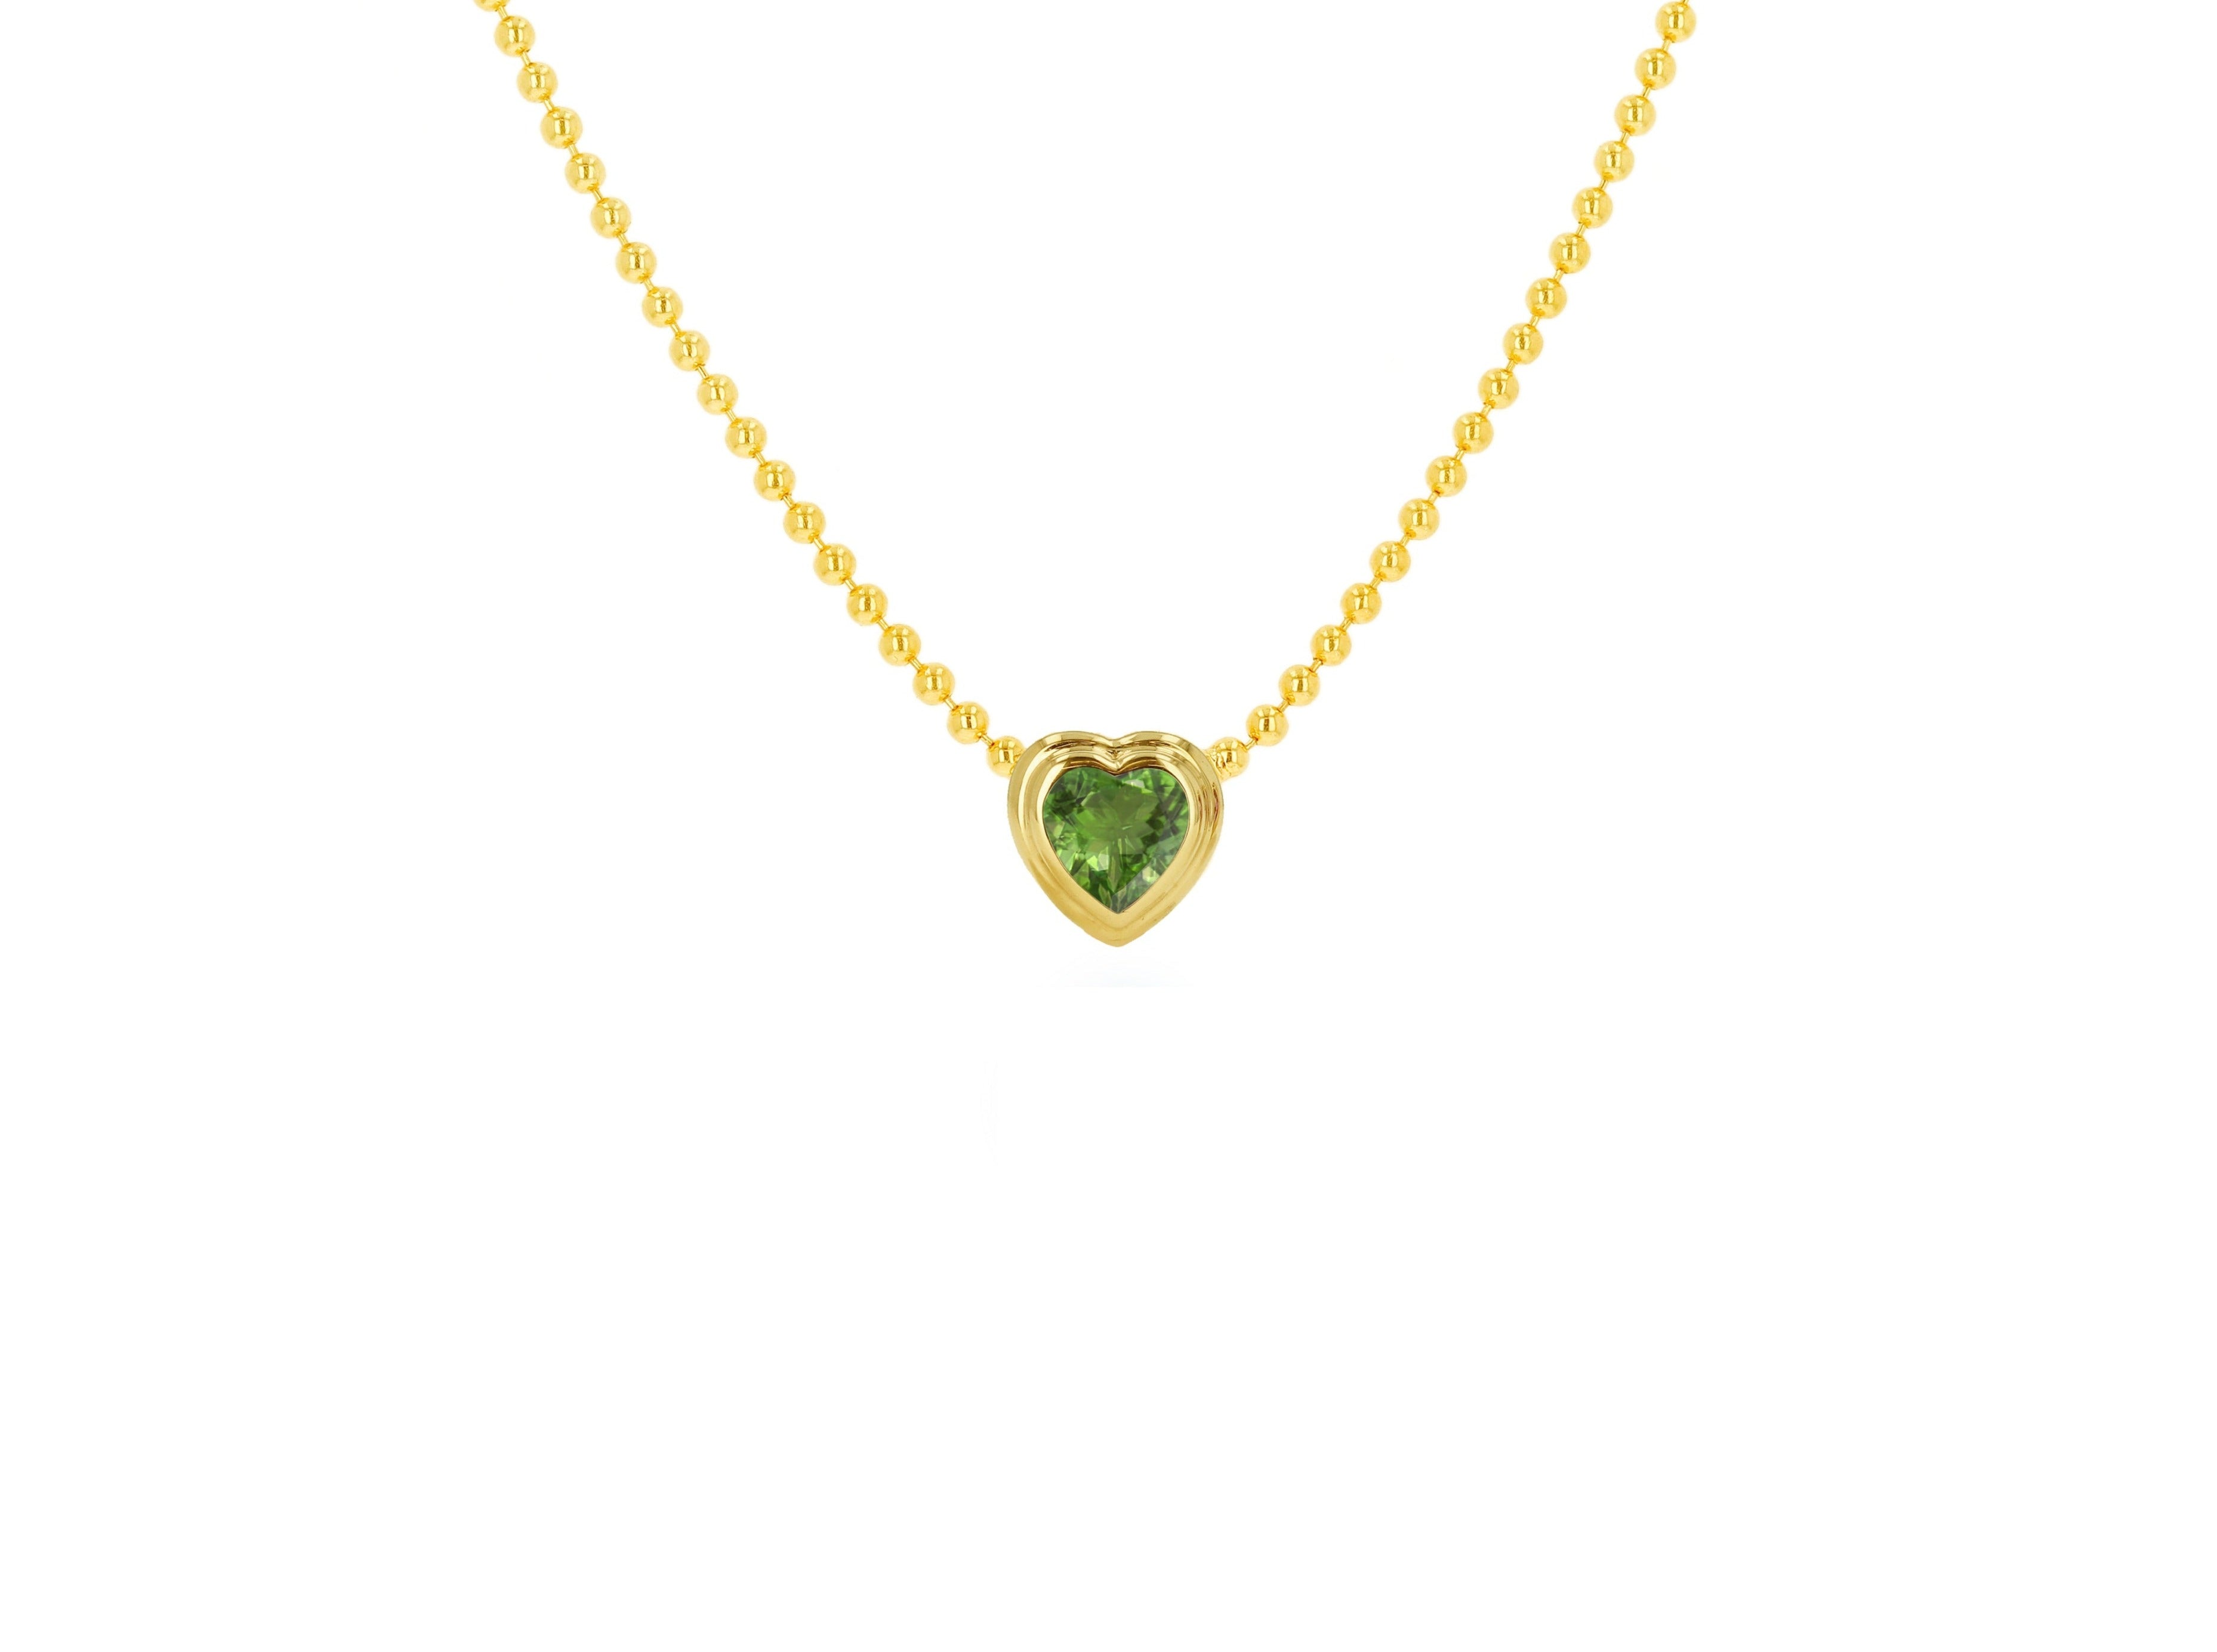 Heart Double Bezel Bead Chain Necklace